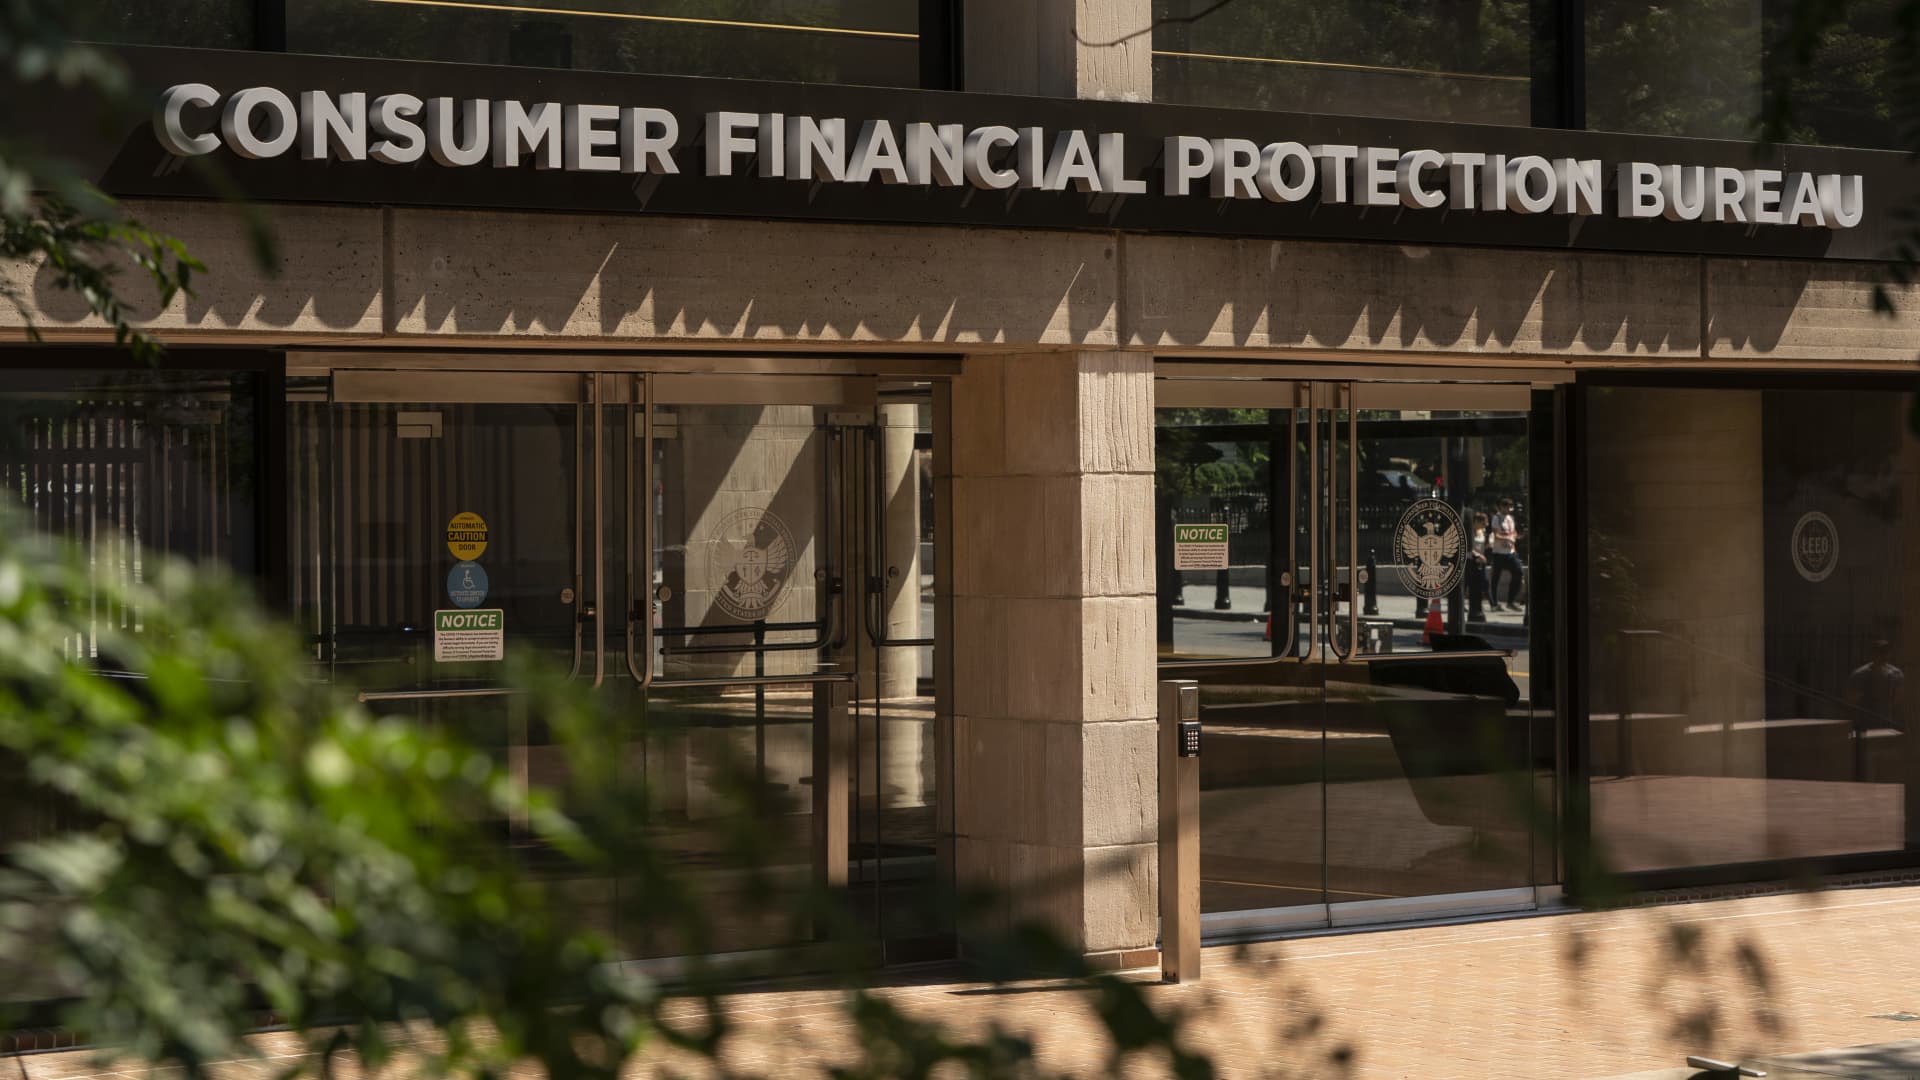 The Consumer Financial Protection Bureau headquarters in Washington, D.C.